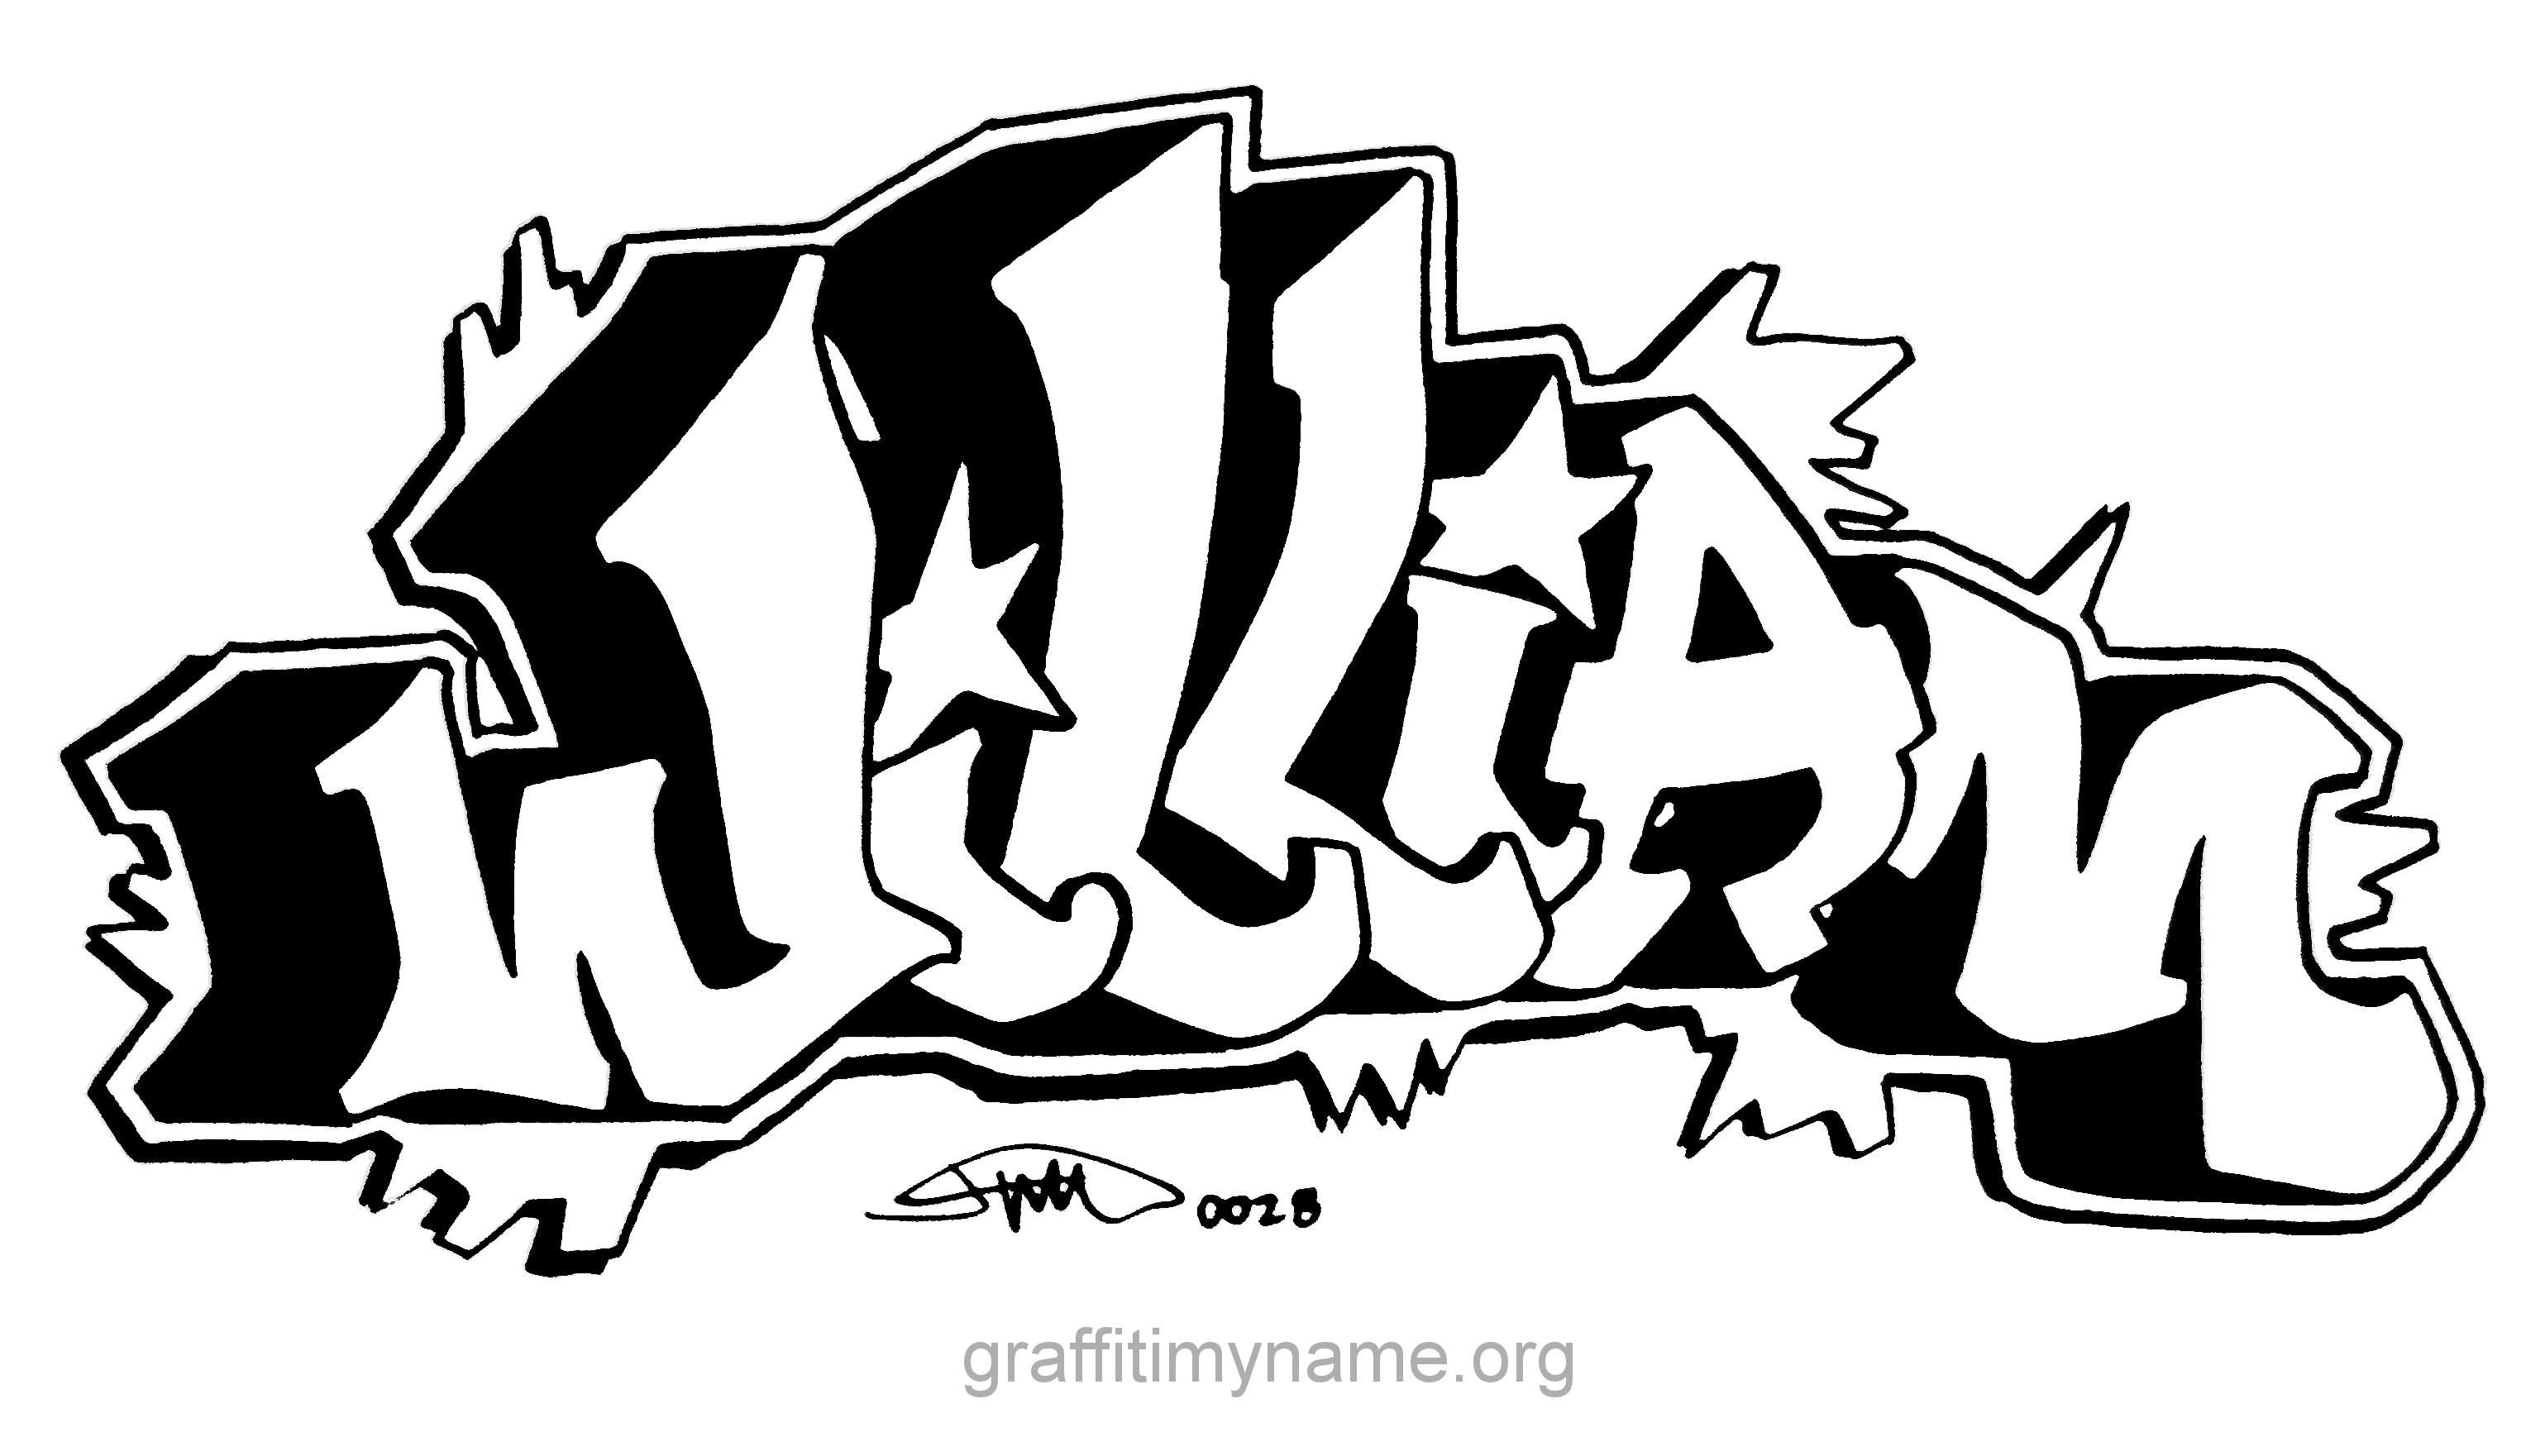 William graffiti name.